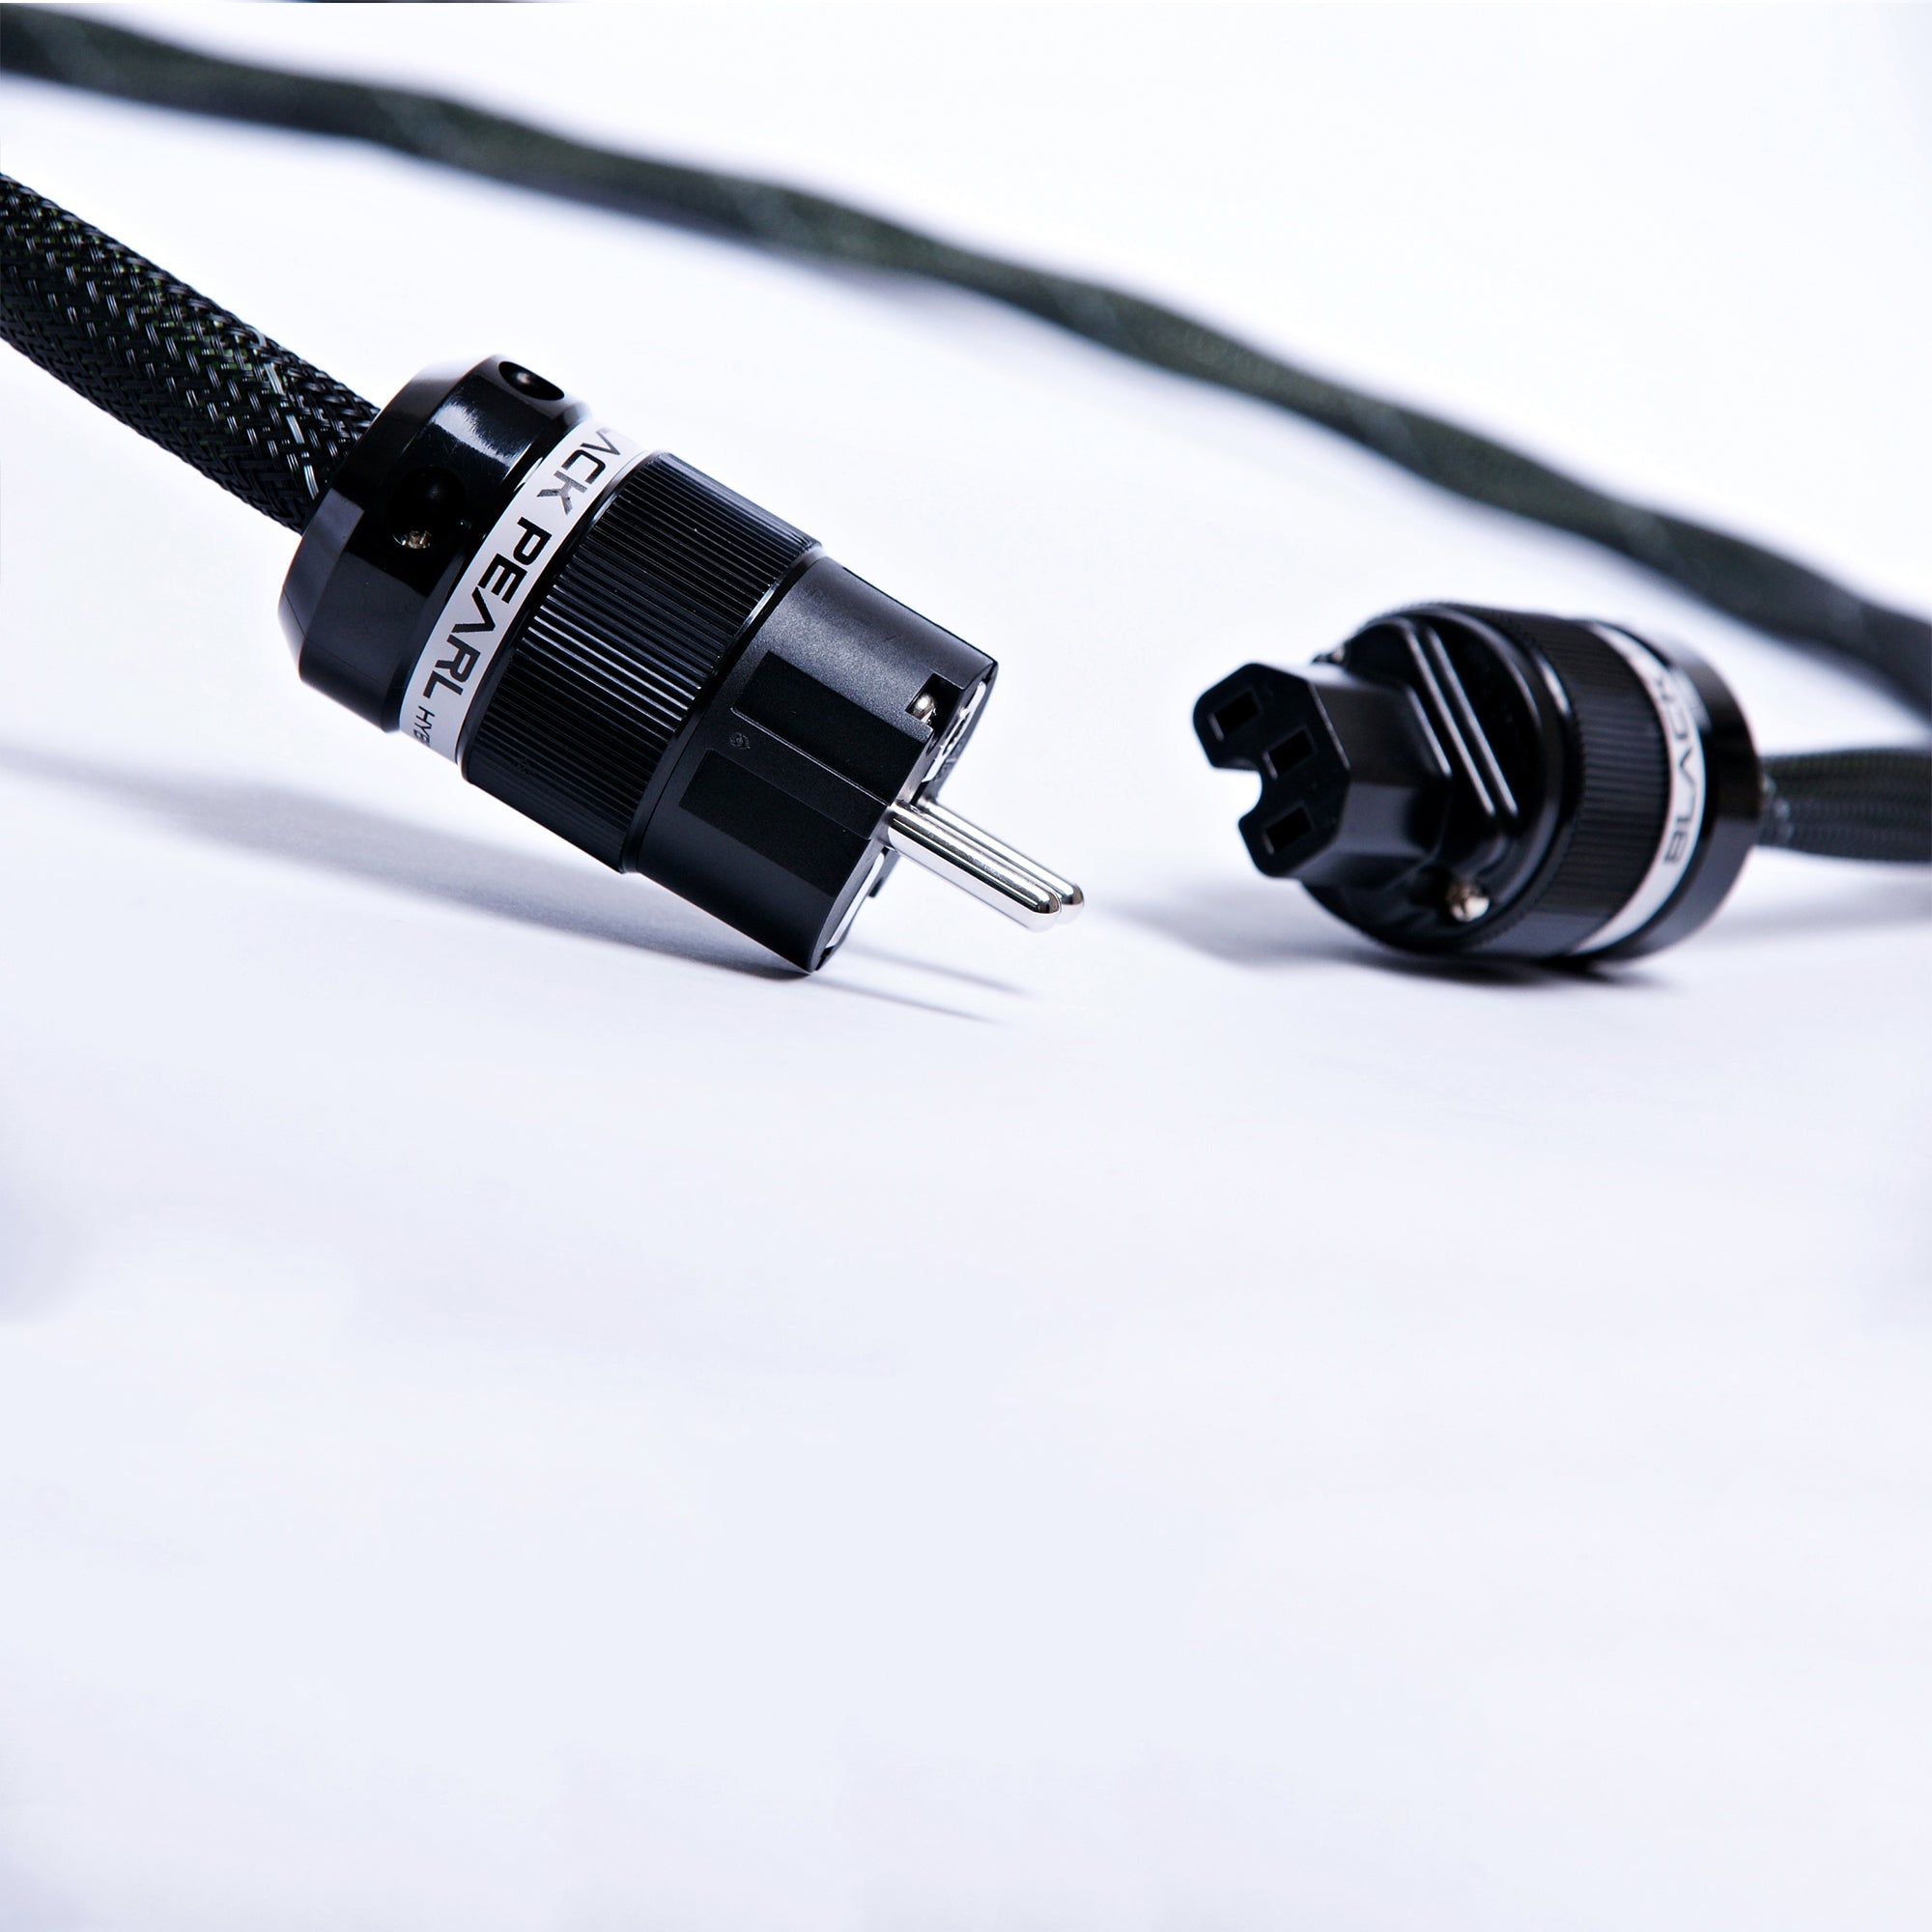 ENERR Black Pearl Hybrid power cable.